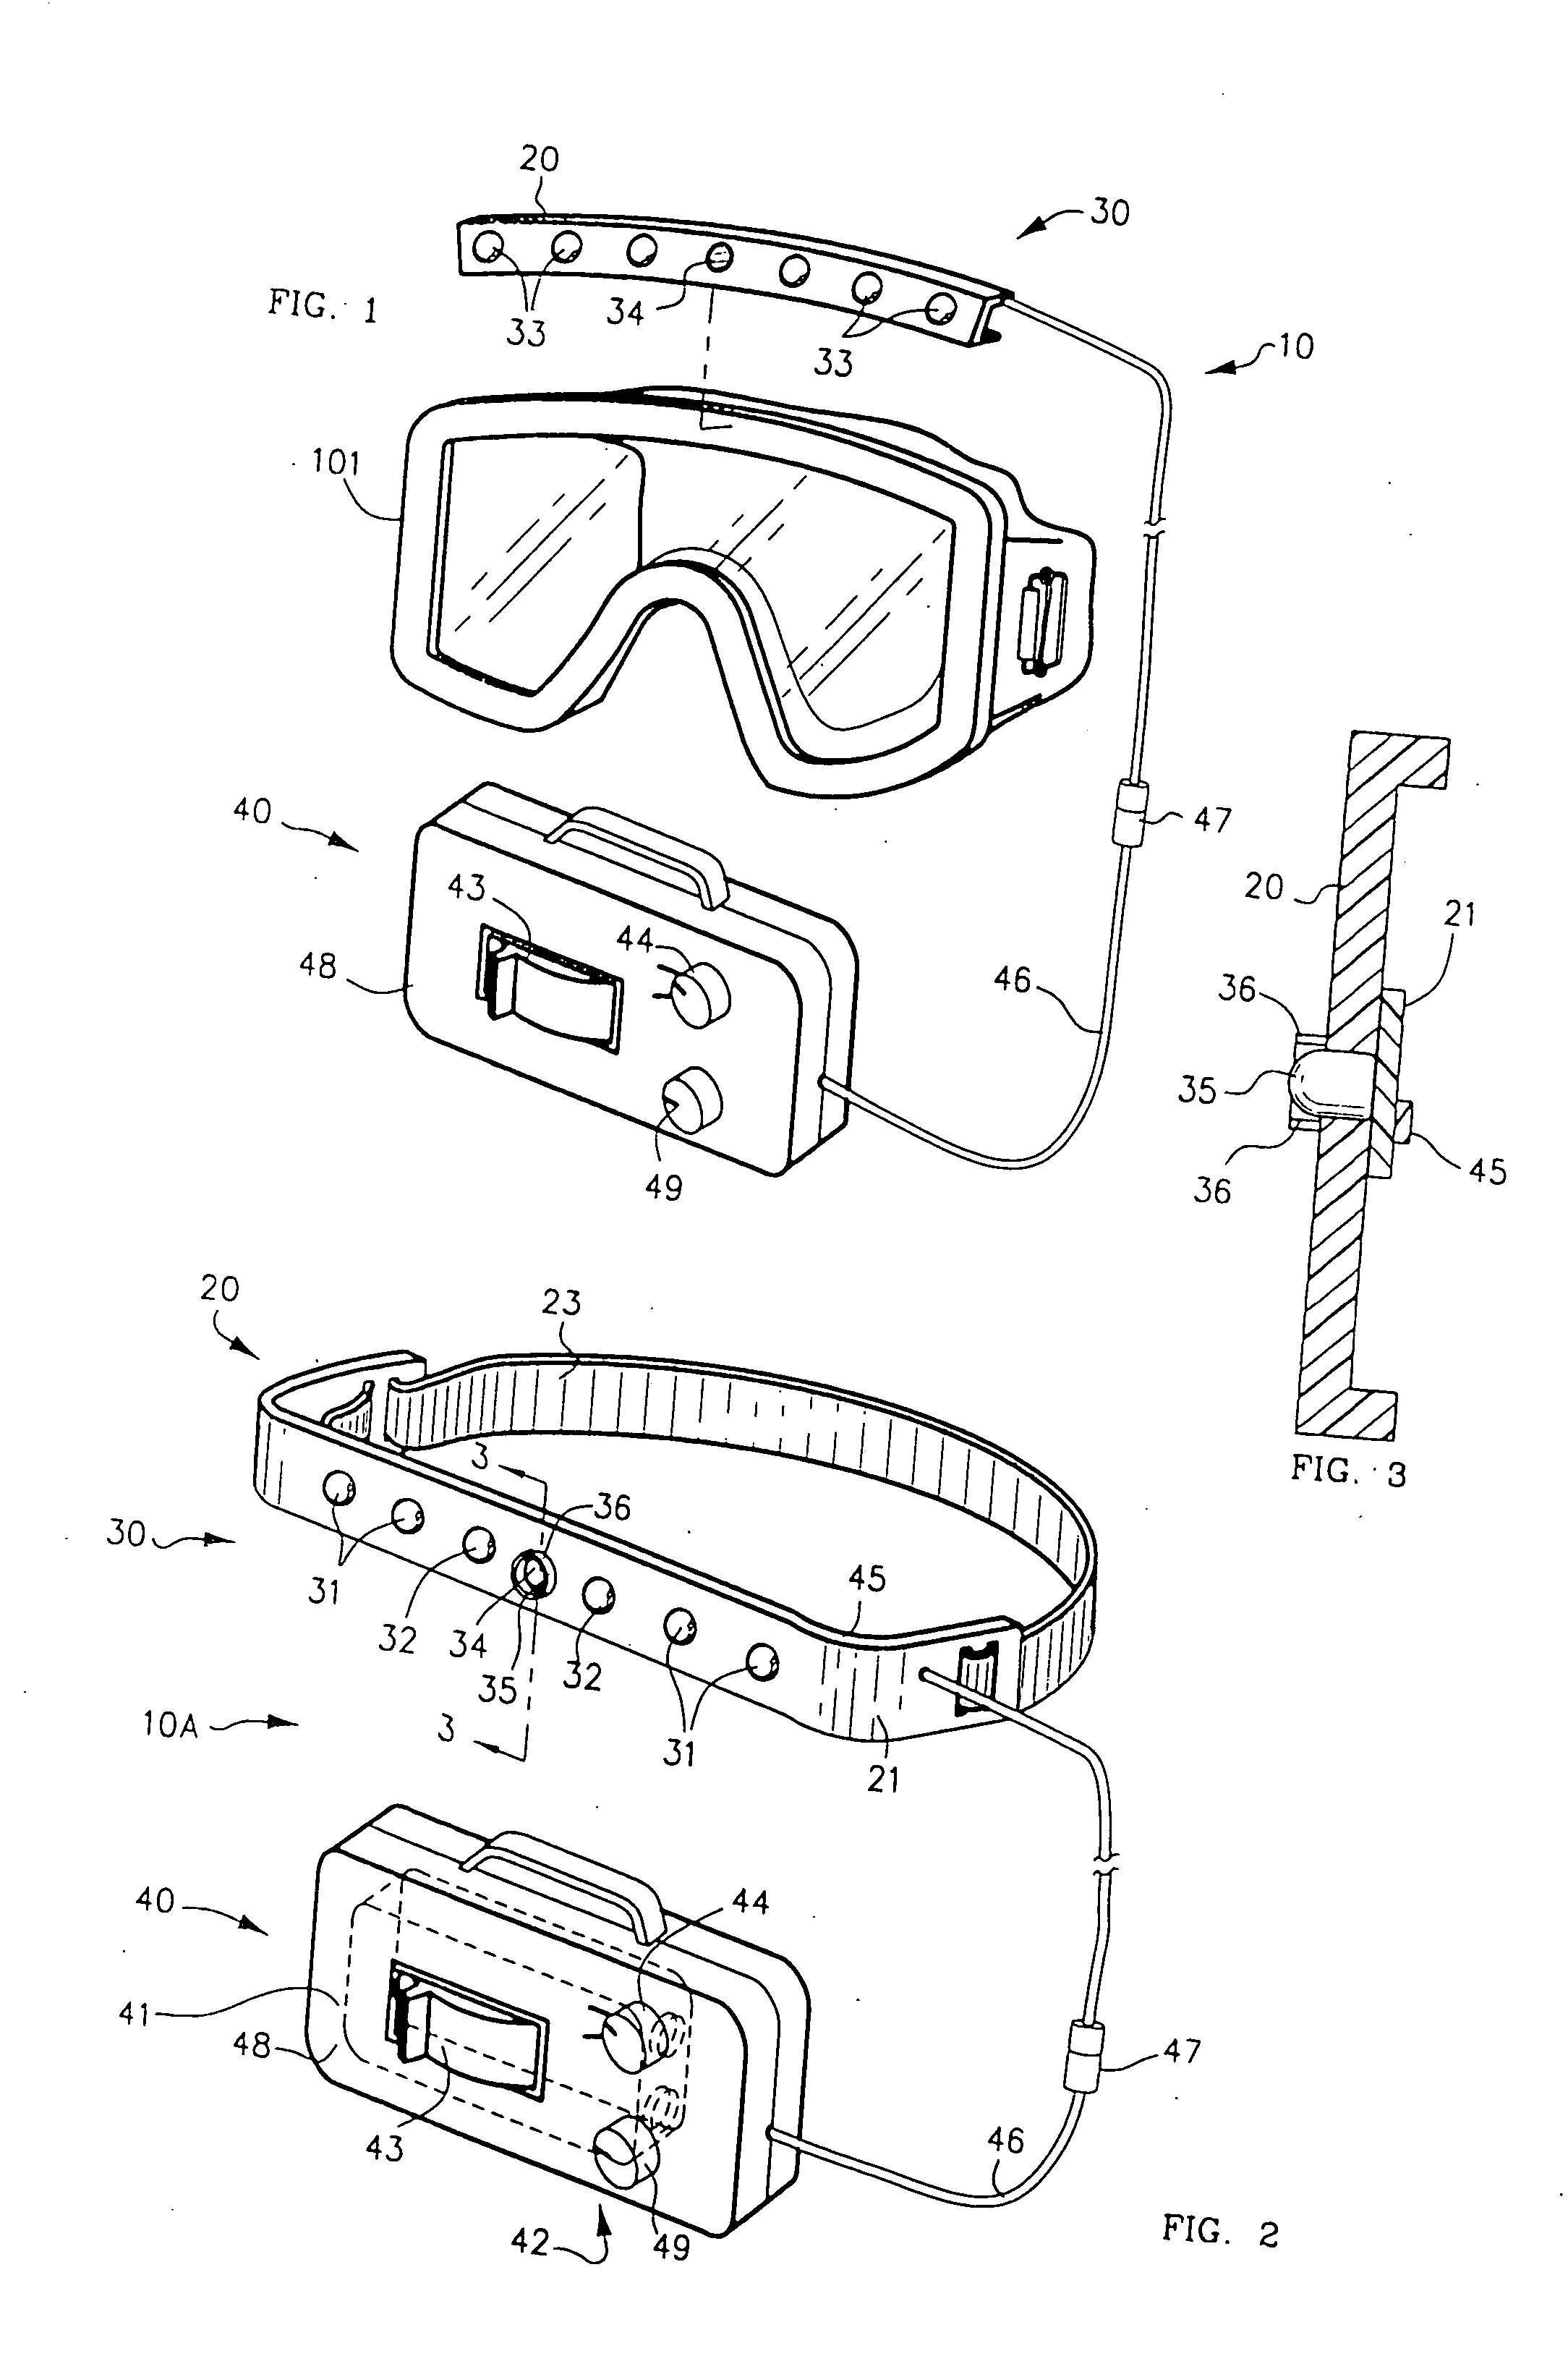 Wearable light device with optical sensor